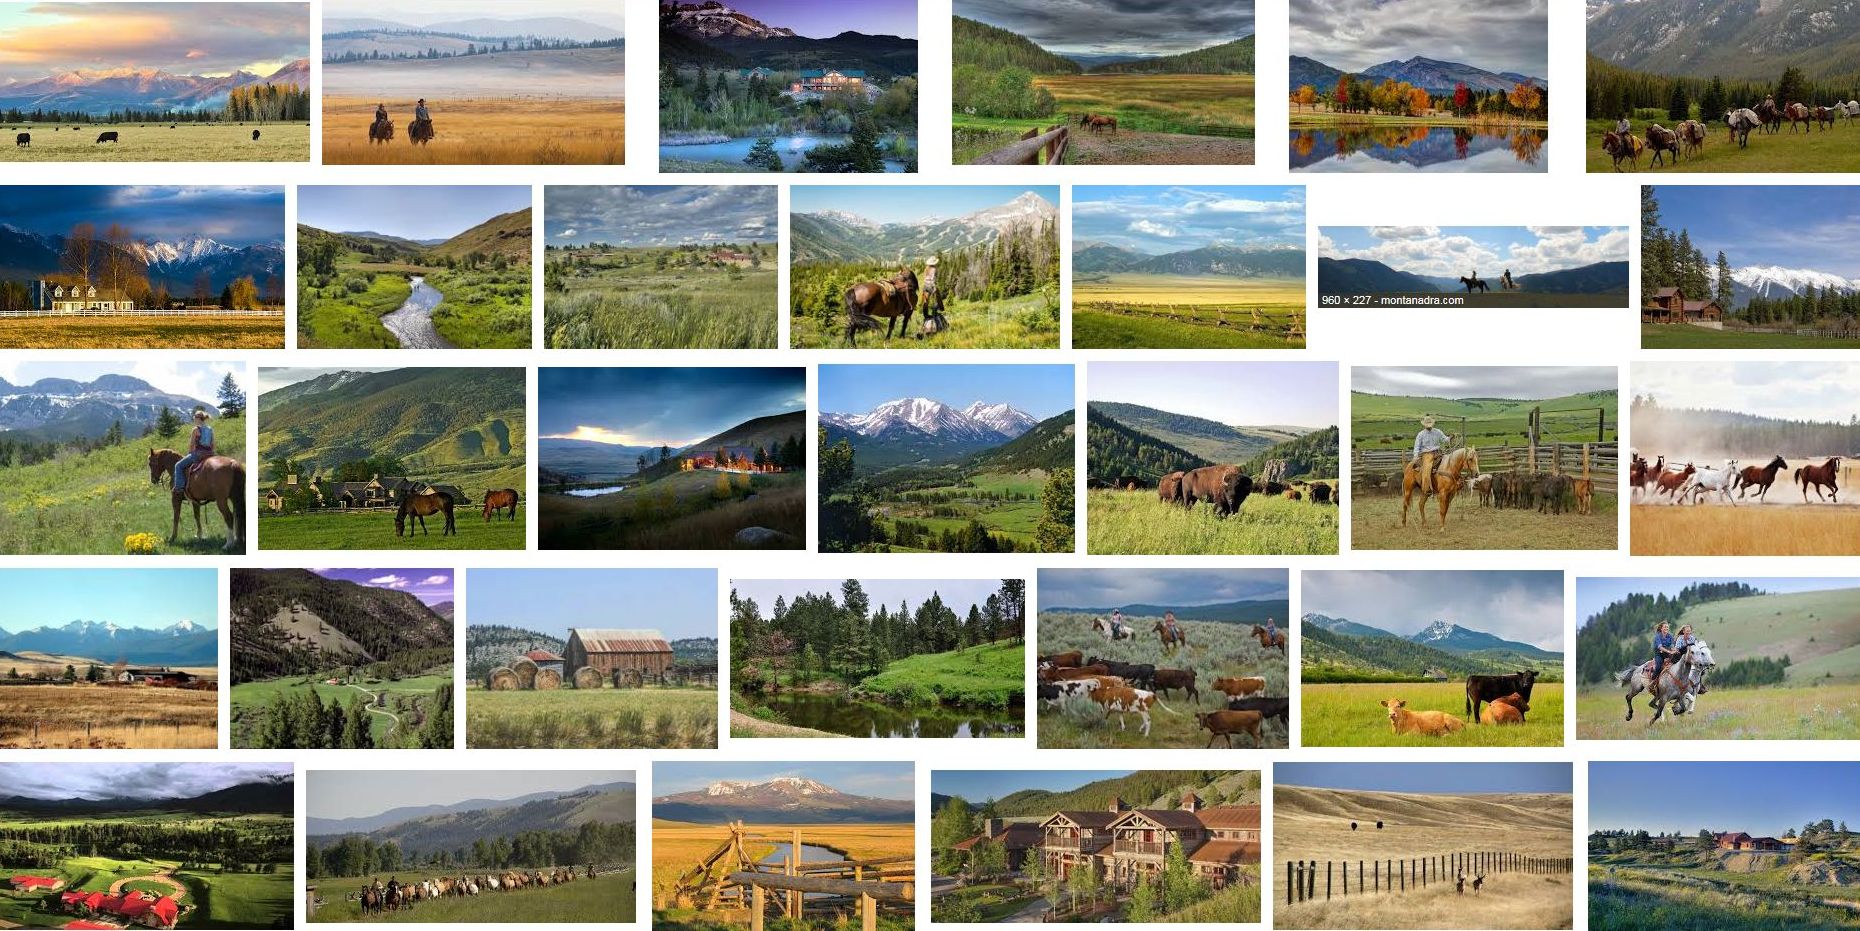 Montana Ranch Listings $300,000 To $400,000